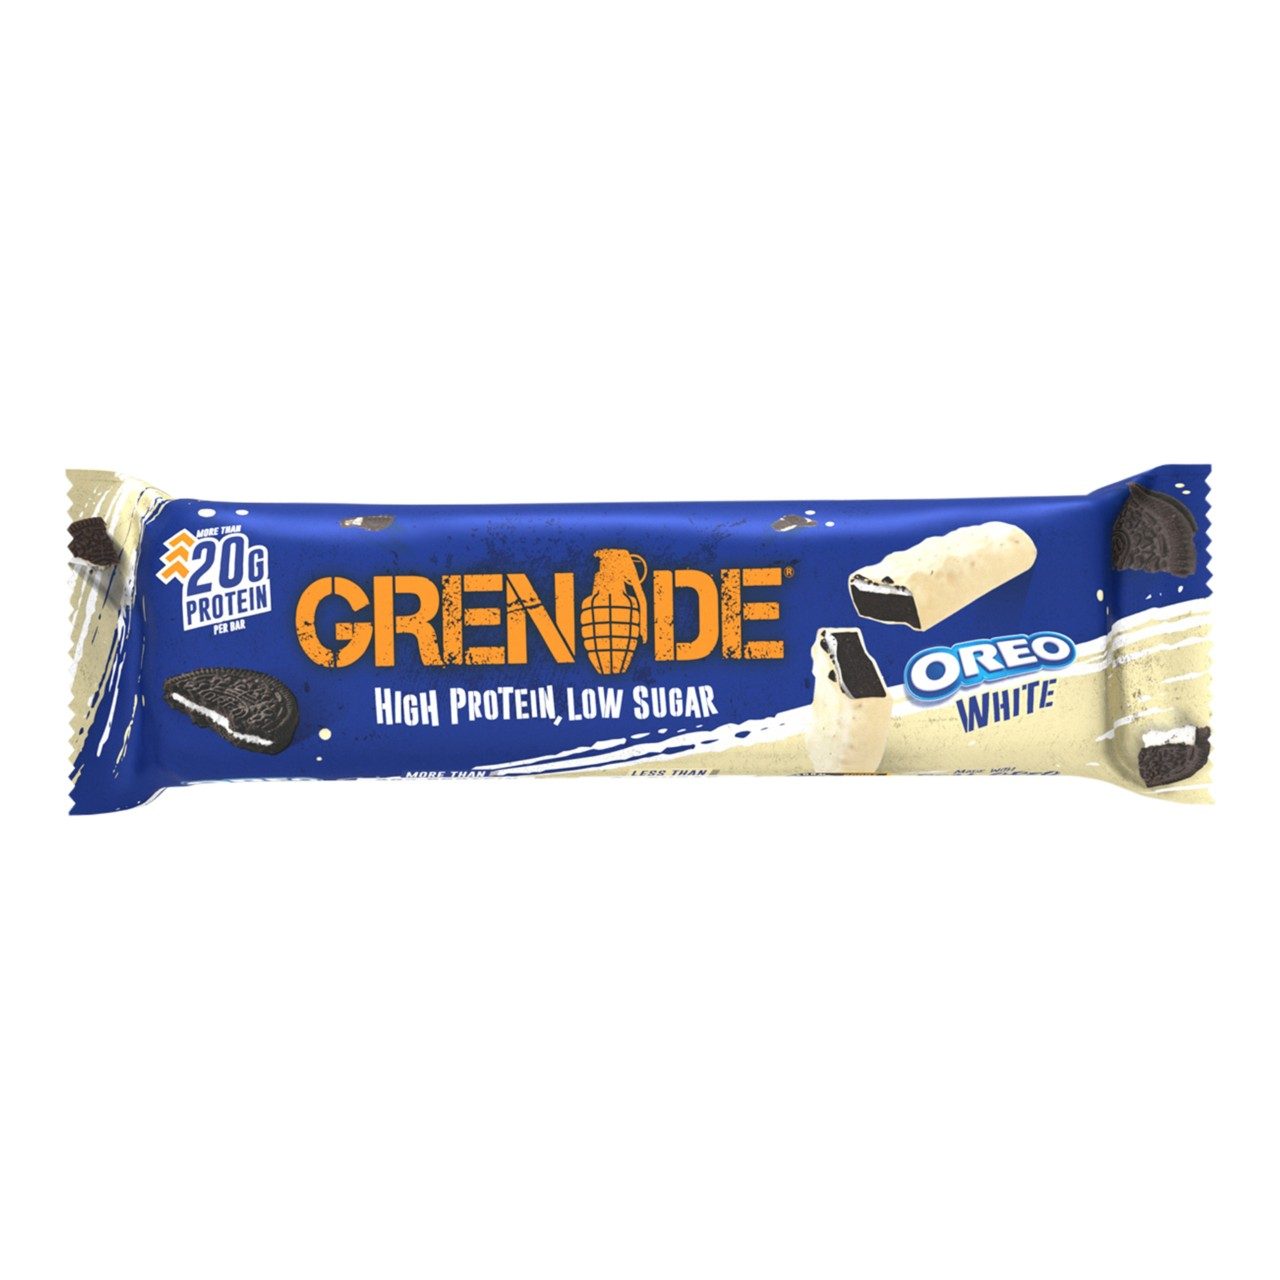 Grenade Protein Bar White Oreo